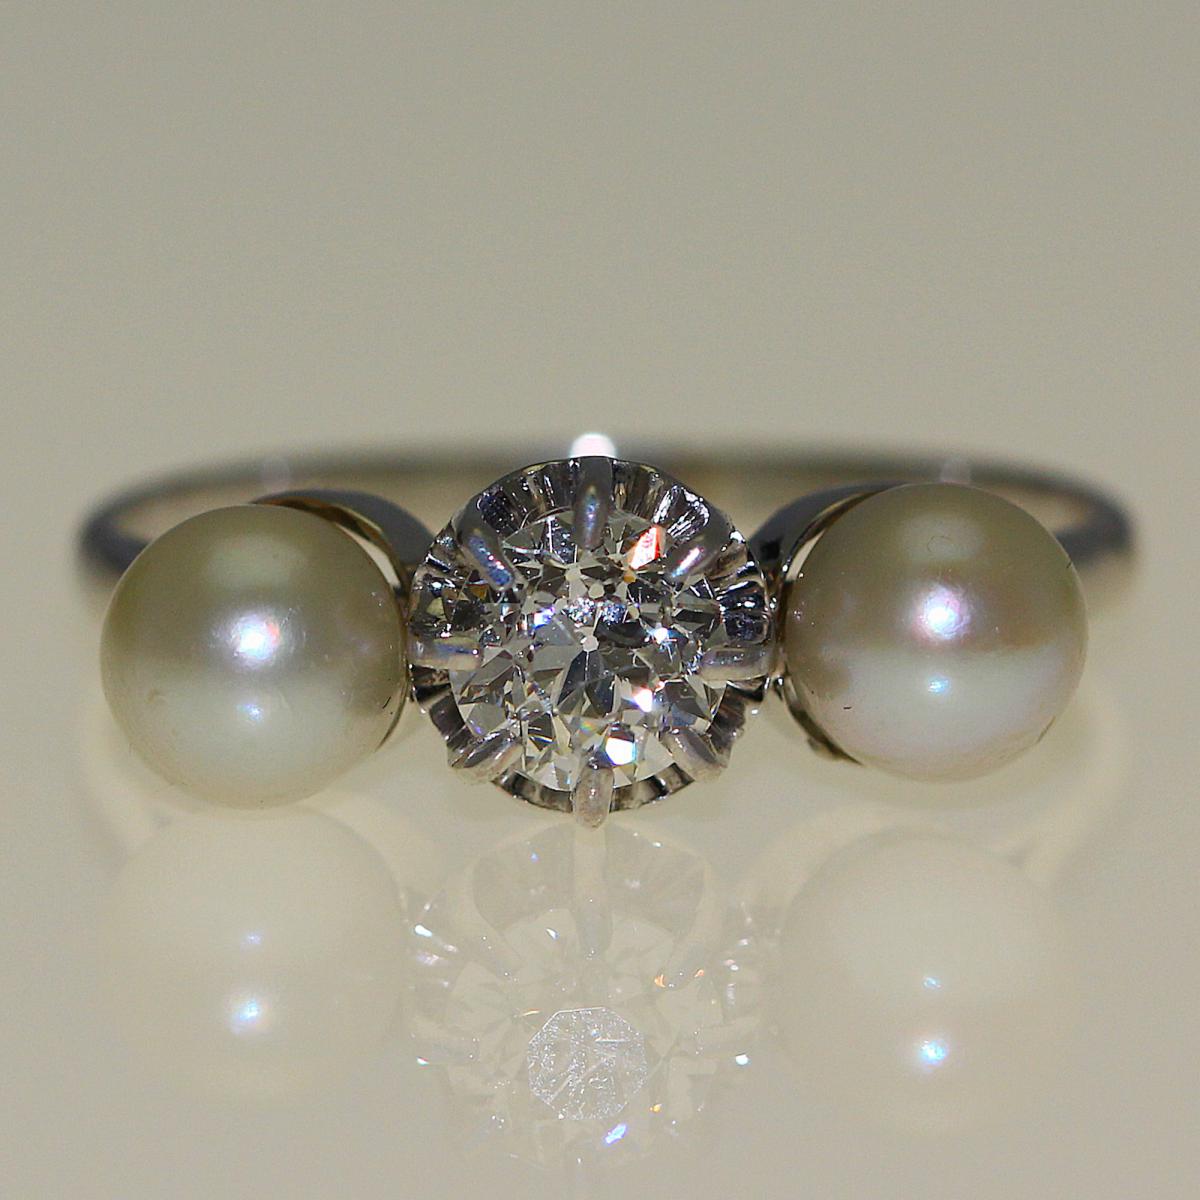 Beads And Diamond Ring.